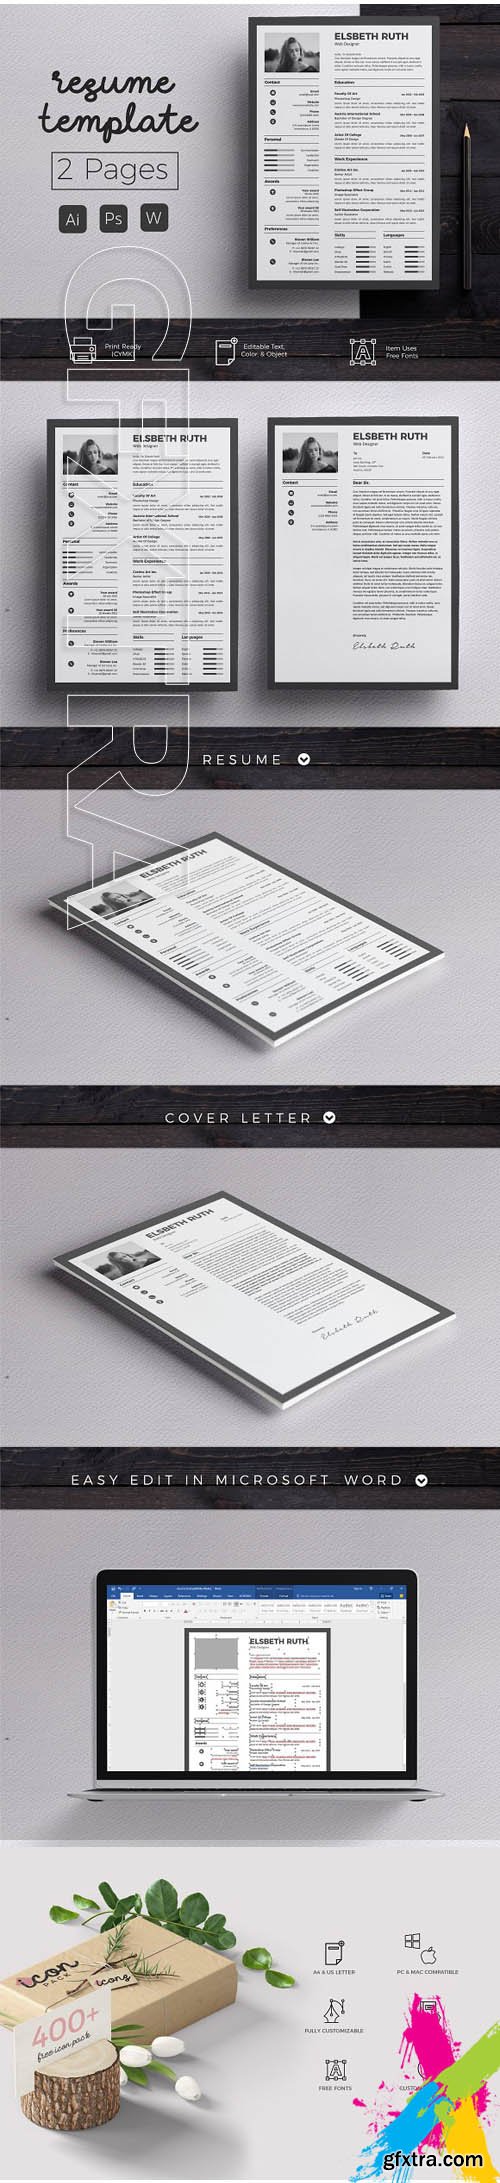 CM - Resume & Cover Letter Template 1633508